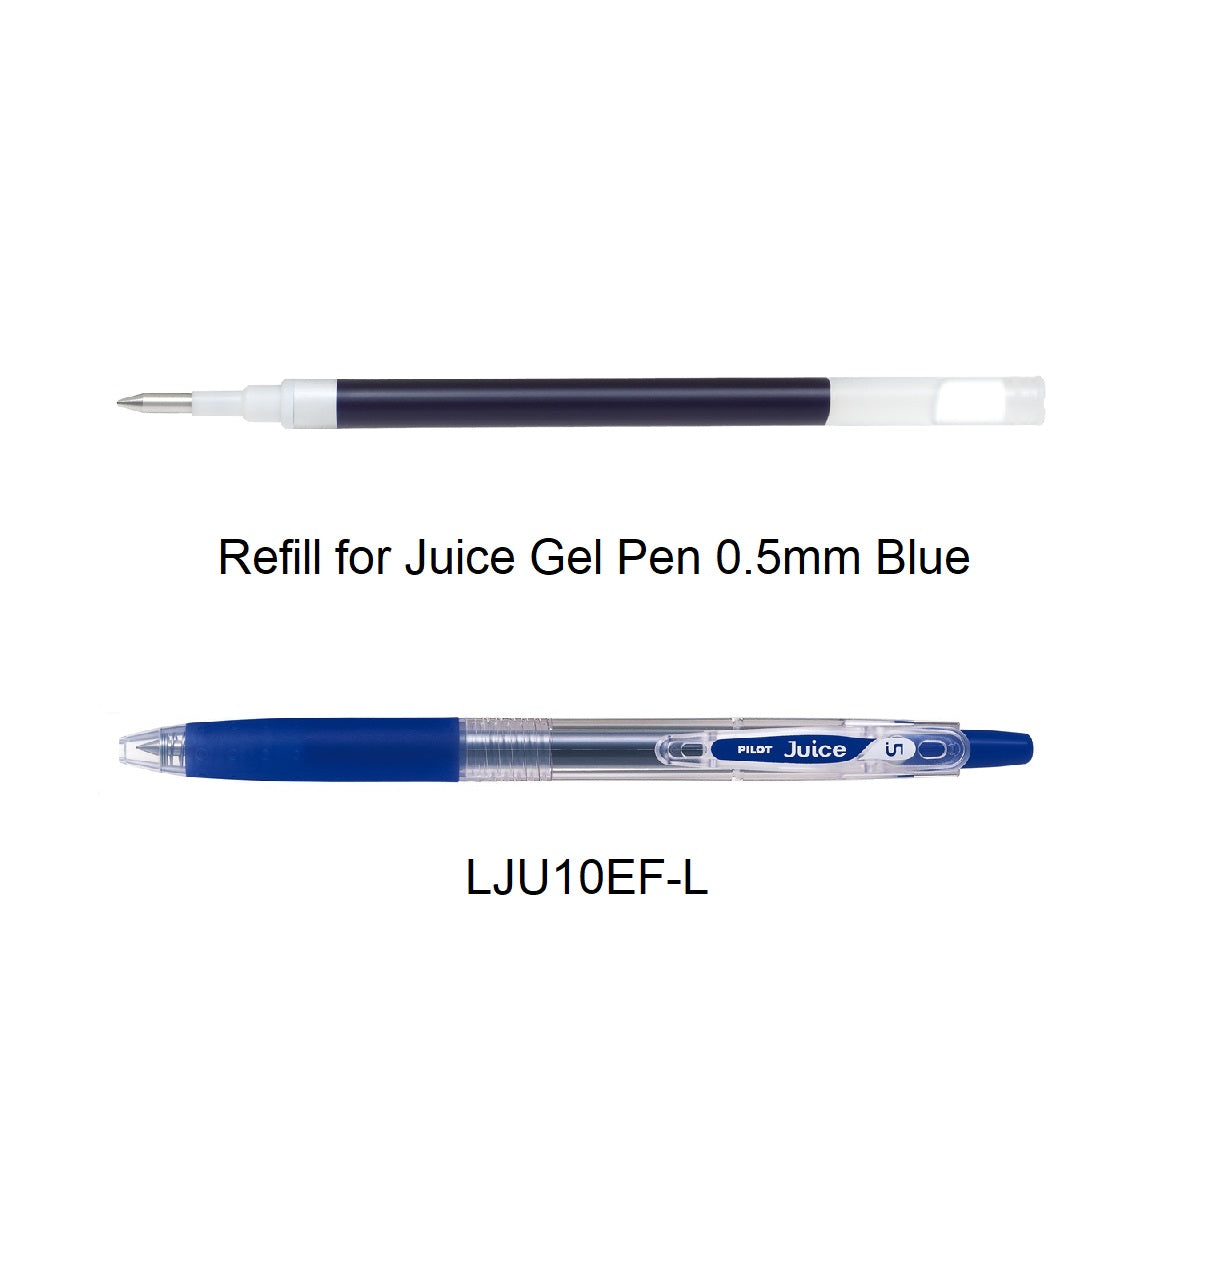 PILOT Refills for Juice 0.5mm Blue (Box of 10pcs) - _MS, DONE, ECTL-10DEAL, ECTL-AUG23, PEN, PILOT